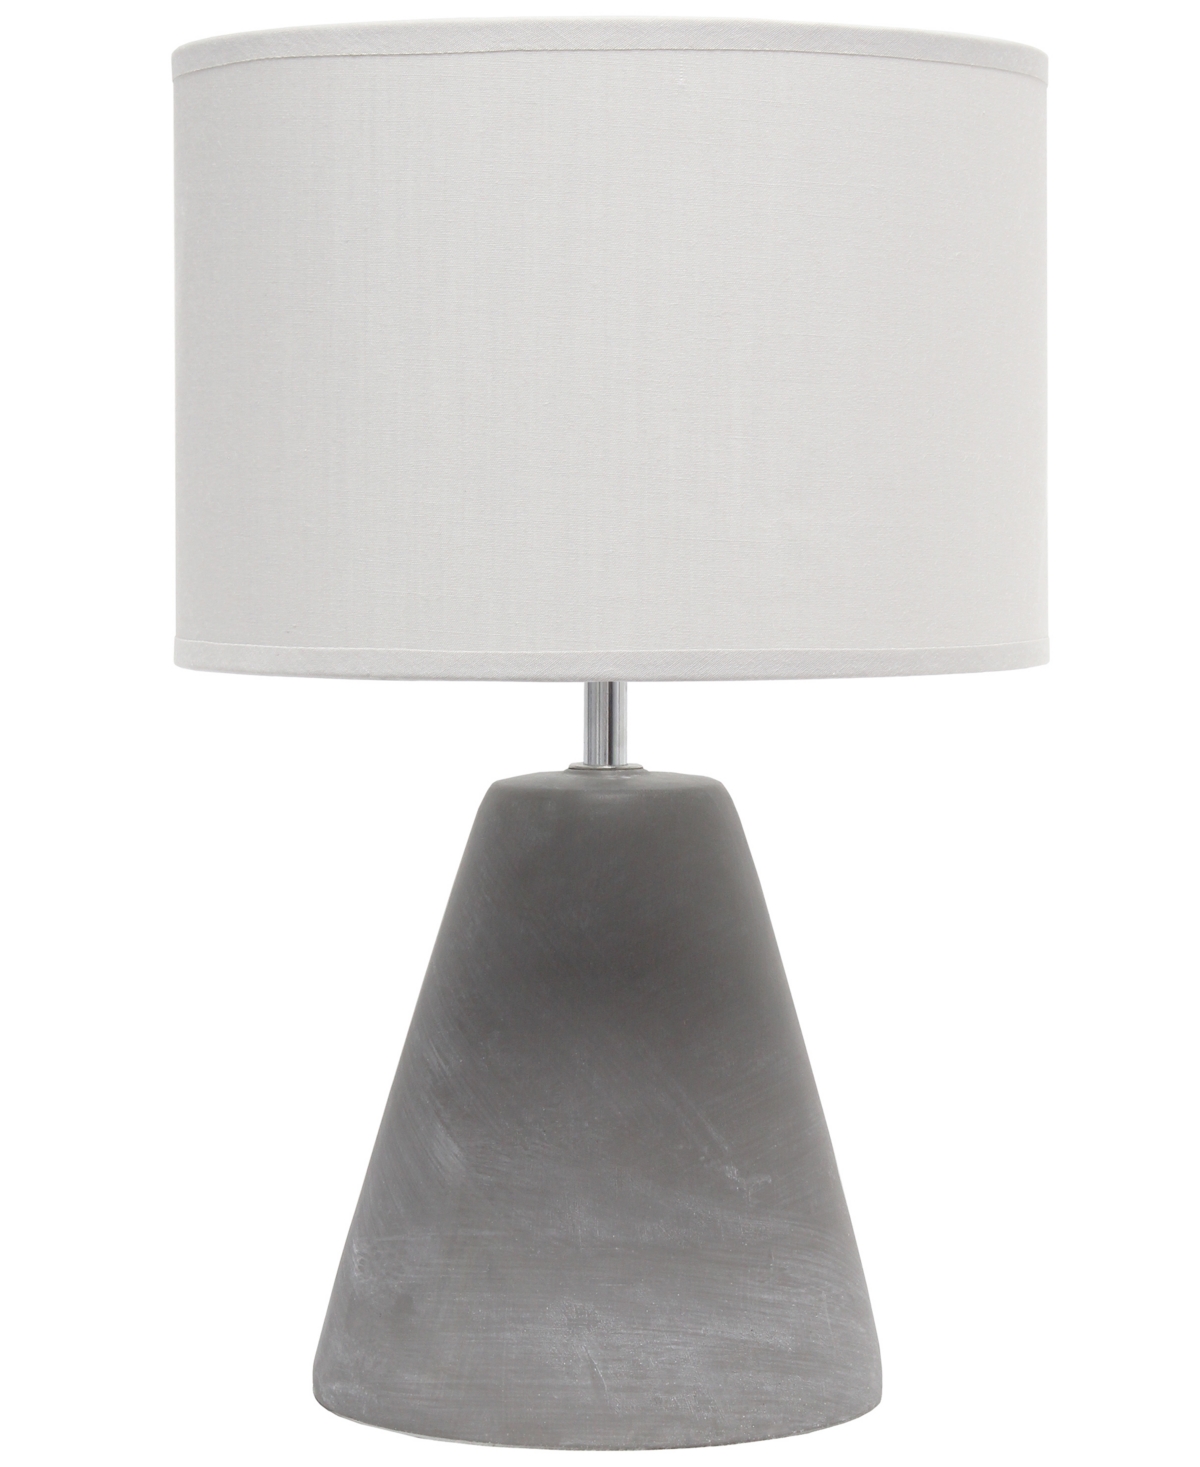 Simple Designs Pinnacle Concrete Table Lamp In Gray